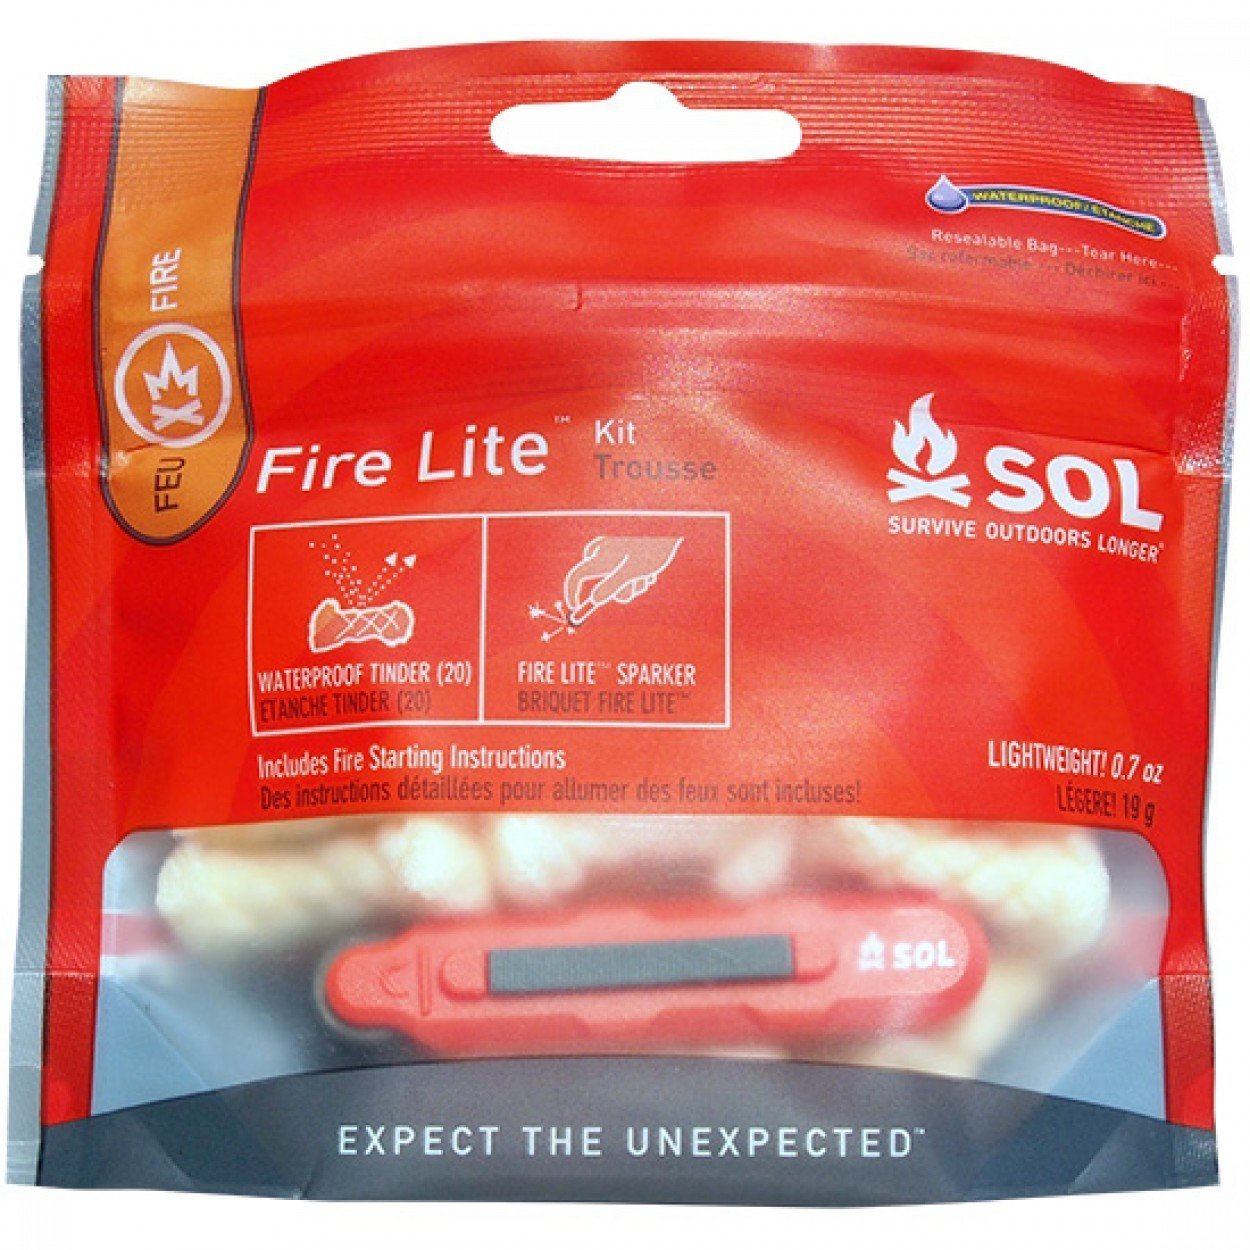 Survive Outdoors Longer SOL Fire Lite Kit Tactical Distributors Ltd New Zealand